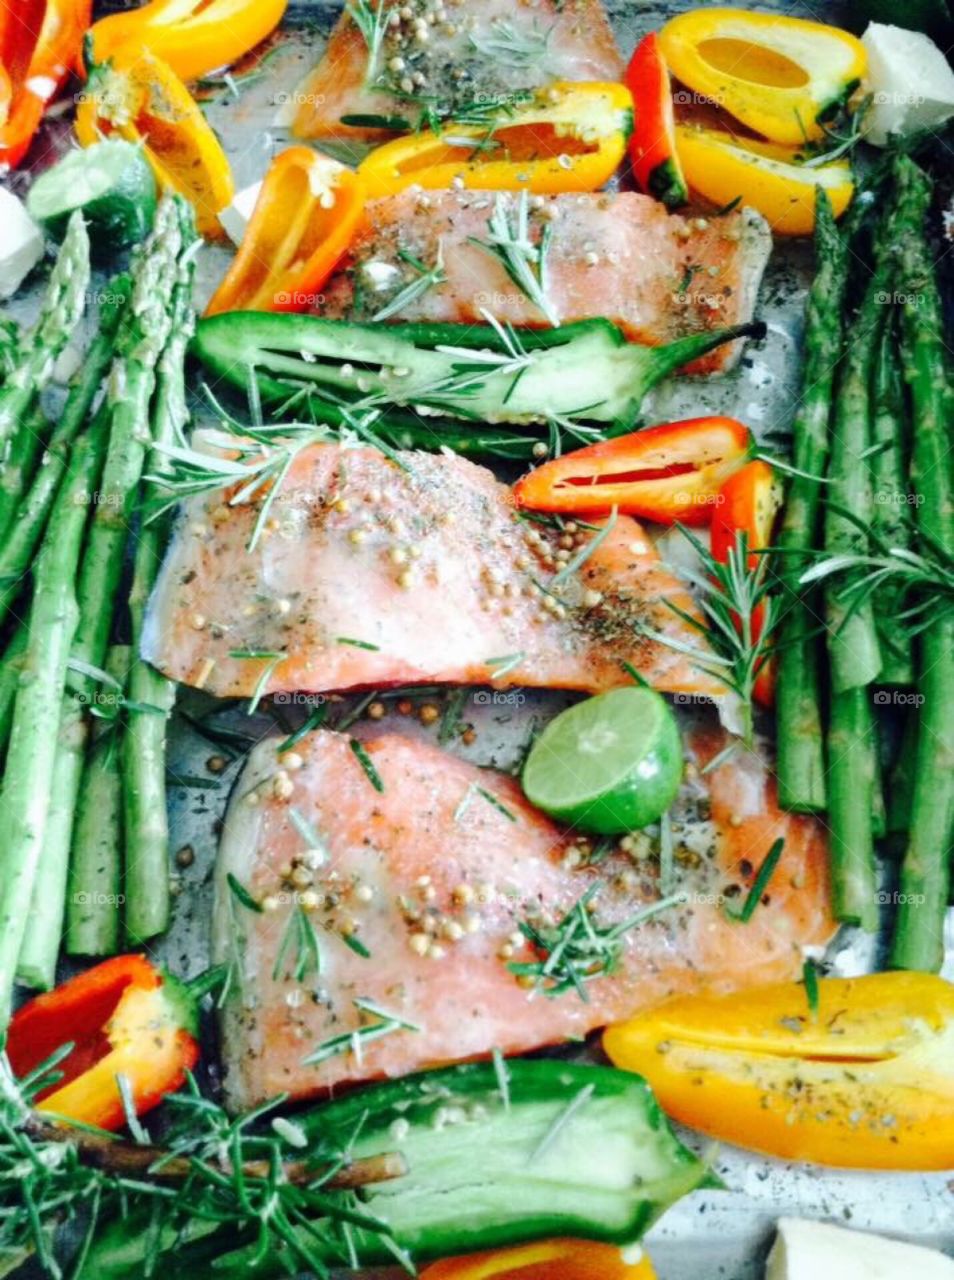 Grilled salmon & veggies 